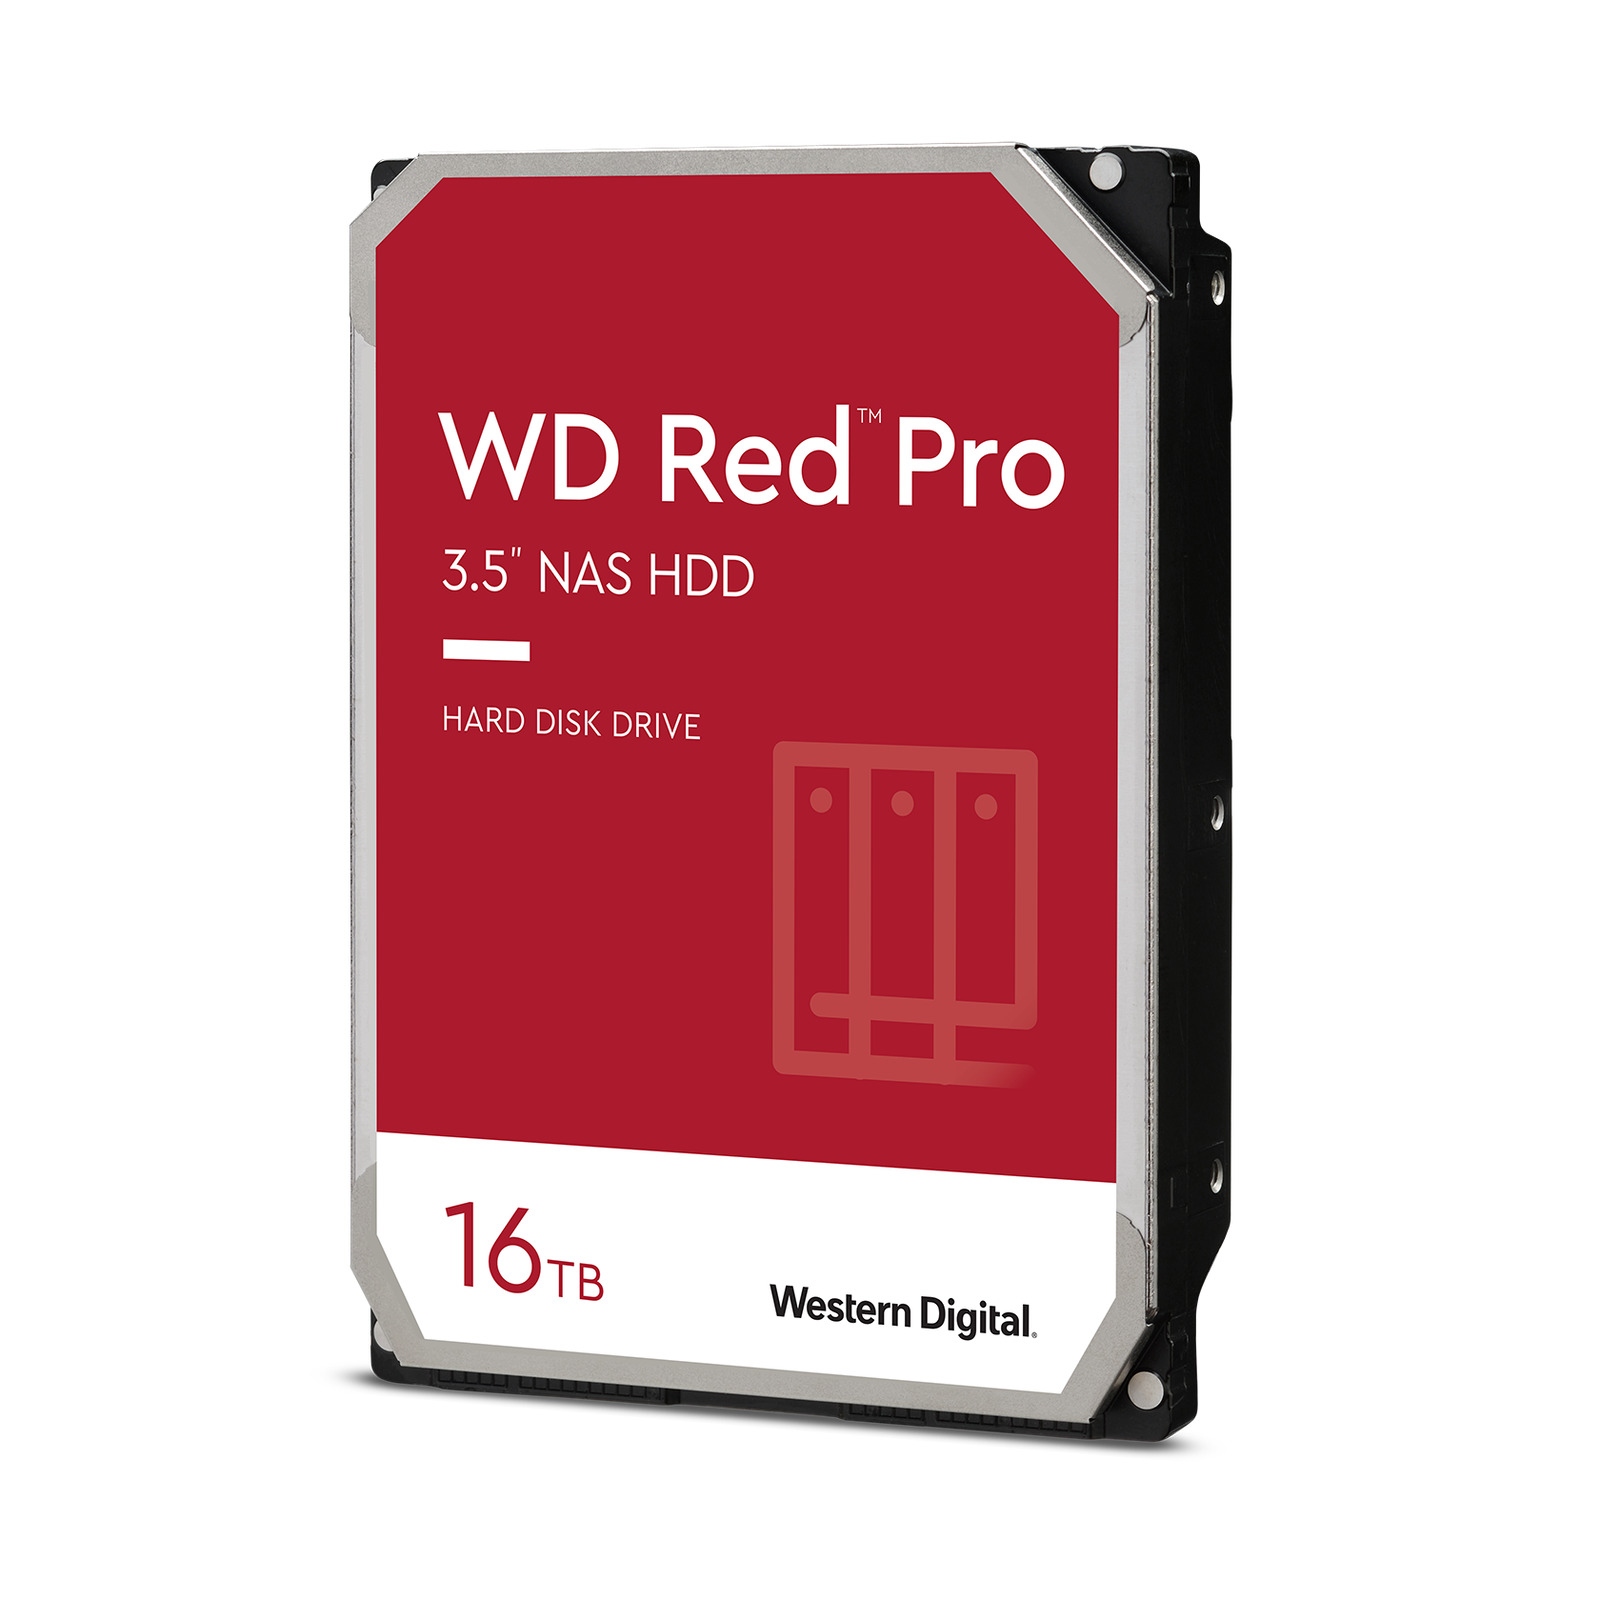 Western Digital 16TB WD Red Pro NAS Internal Hard Drive, 512MB Cache - WD161KFGX